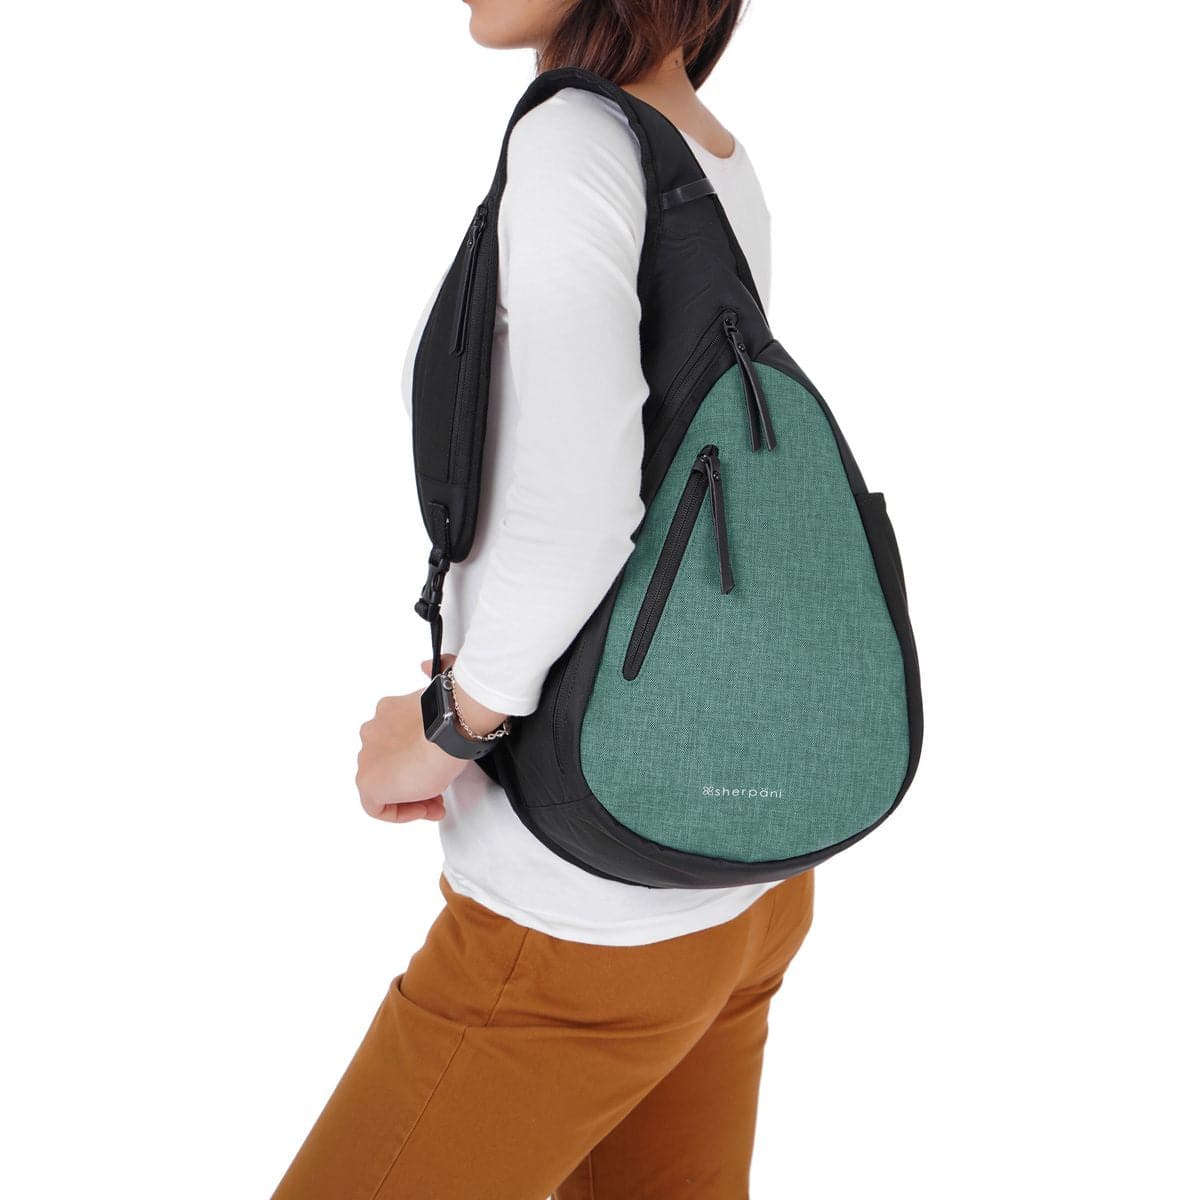 Sherpani Anti-Theft Esprit AT Shoulder Sling Bag